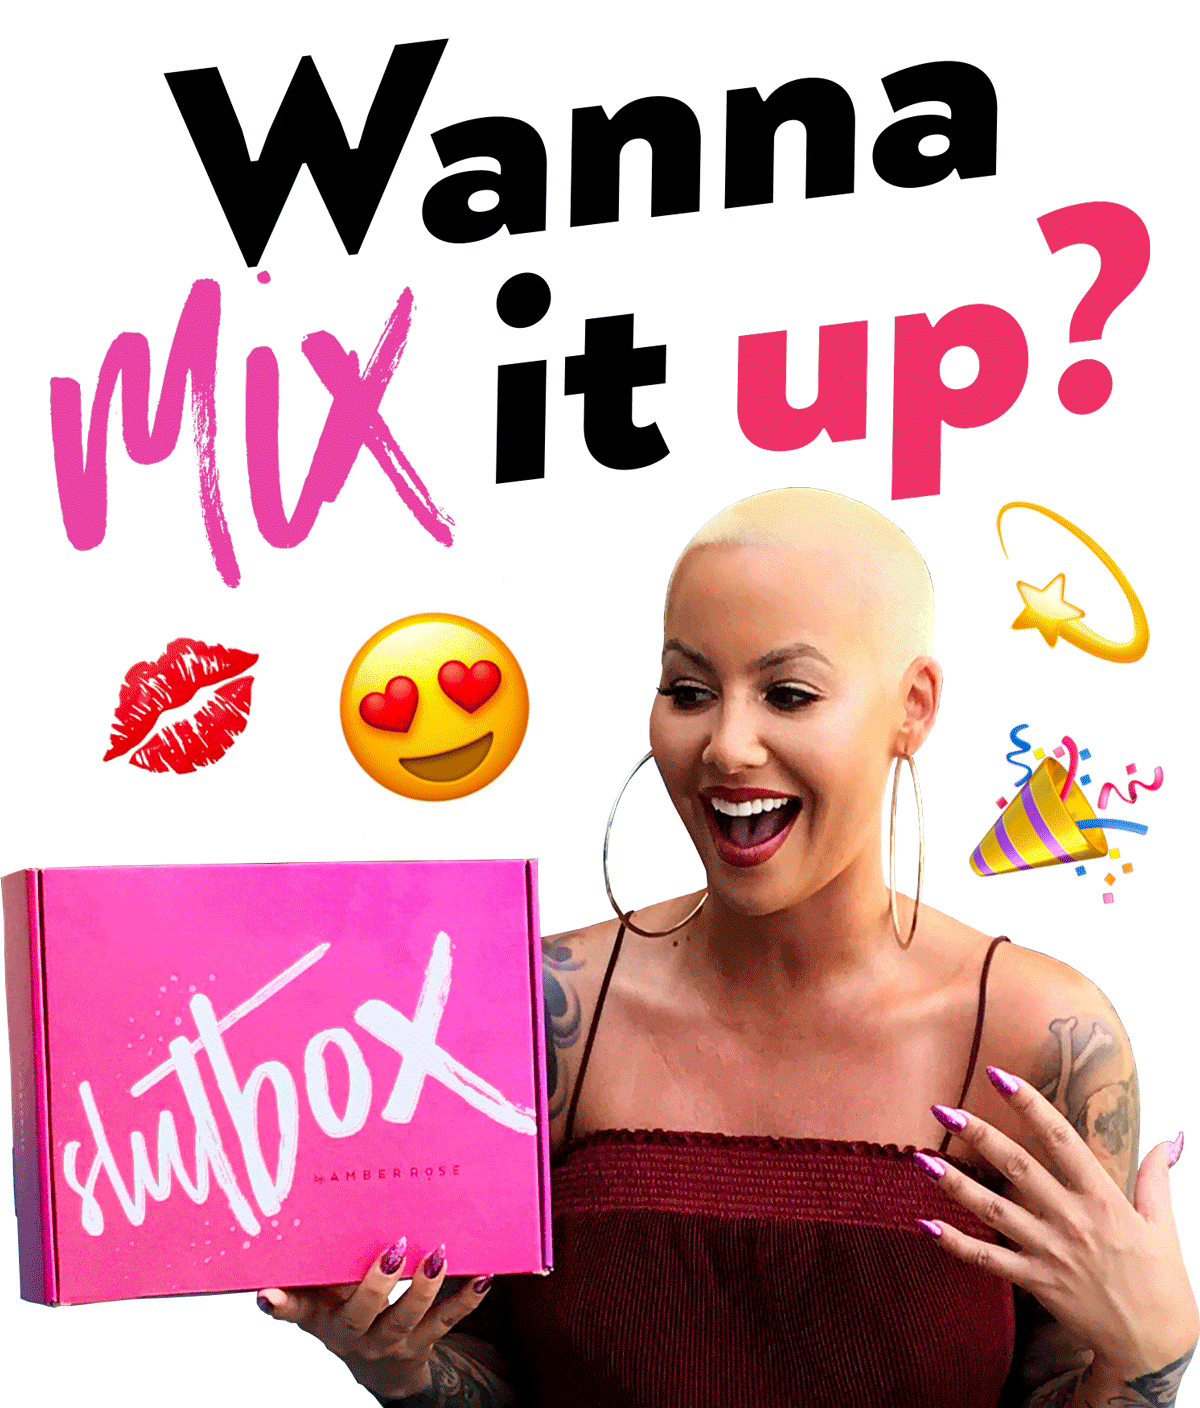 SlutBox by Amber Rose Mystery Box Sale!